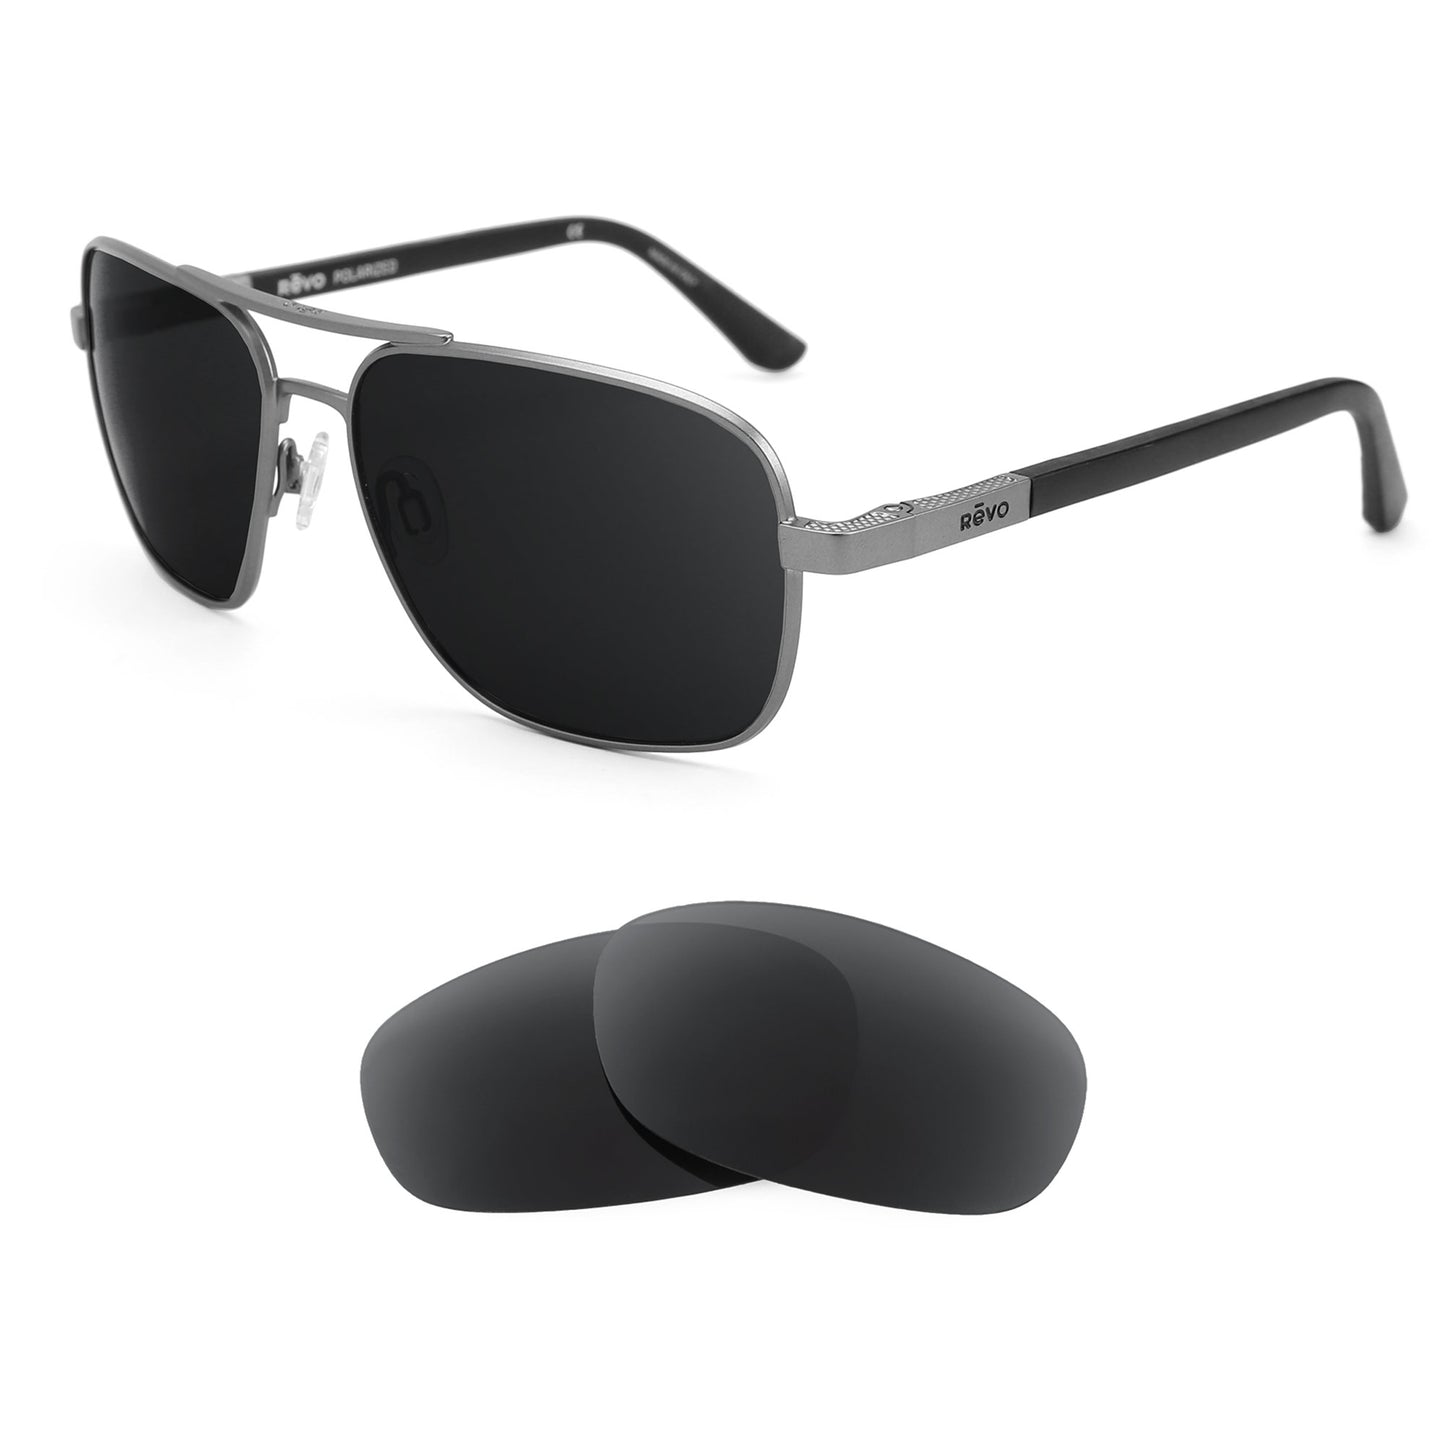 Revo Freeman RE1012 sunglasses with replacement lenses